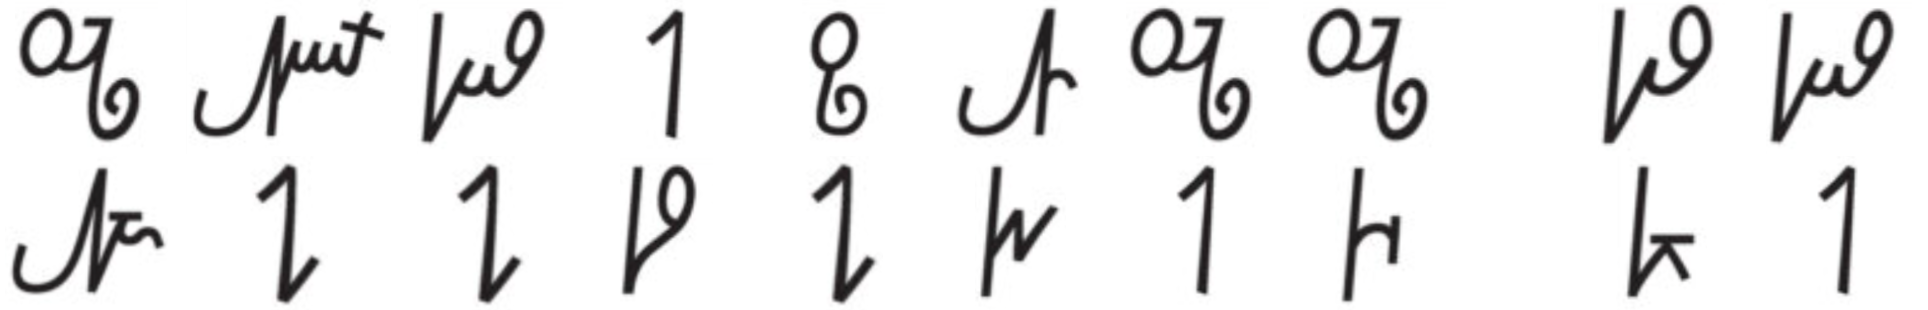 two rows of non-latin symbols 4